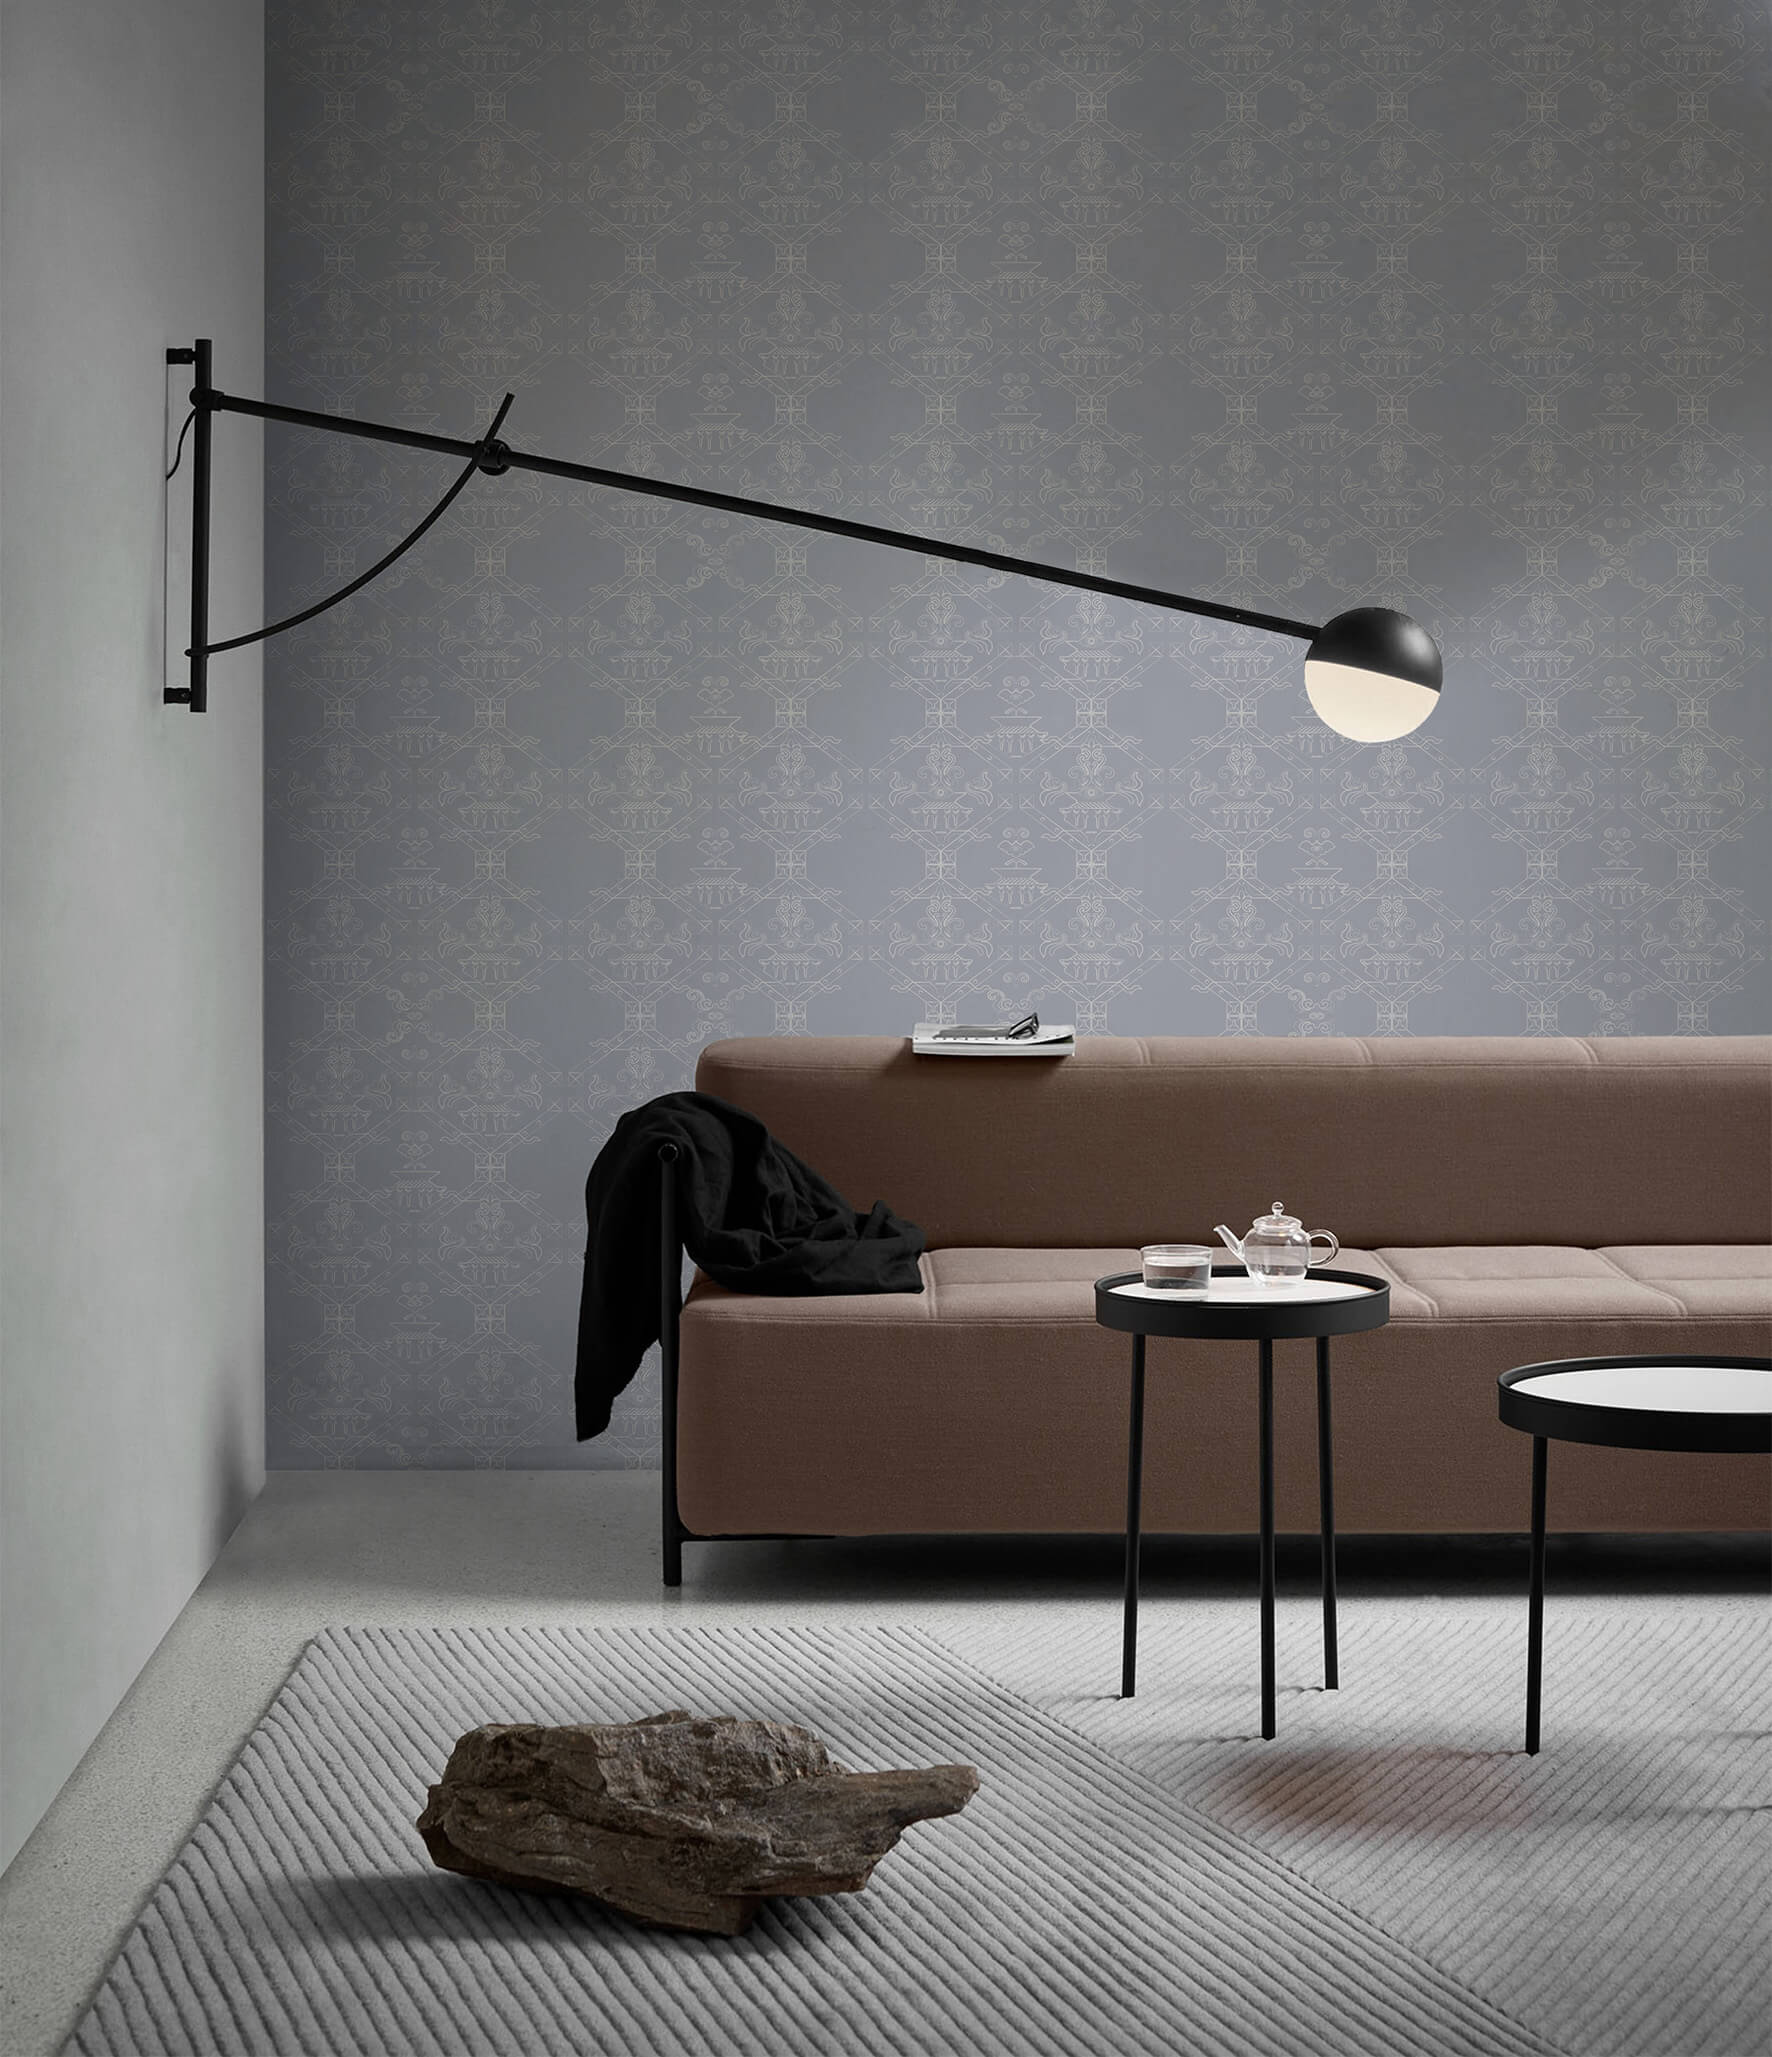 Ricamo-Powder-Grey-MaVoix-wallpaper-interior-living-room-decor